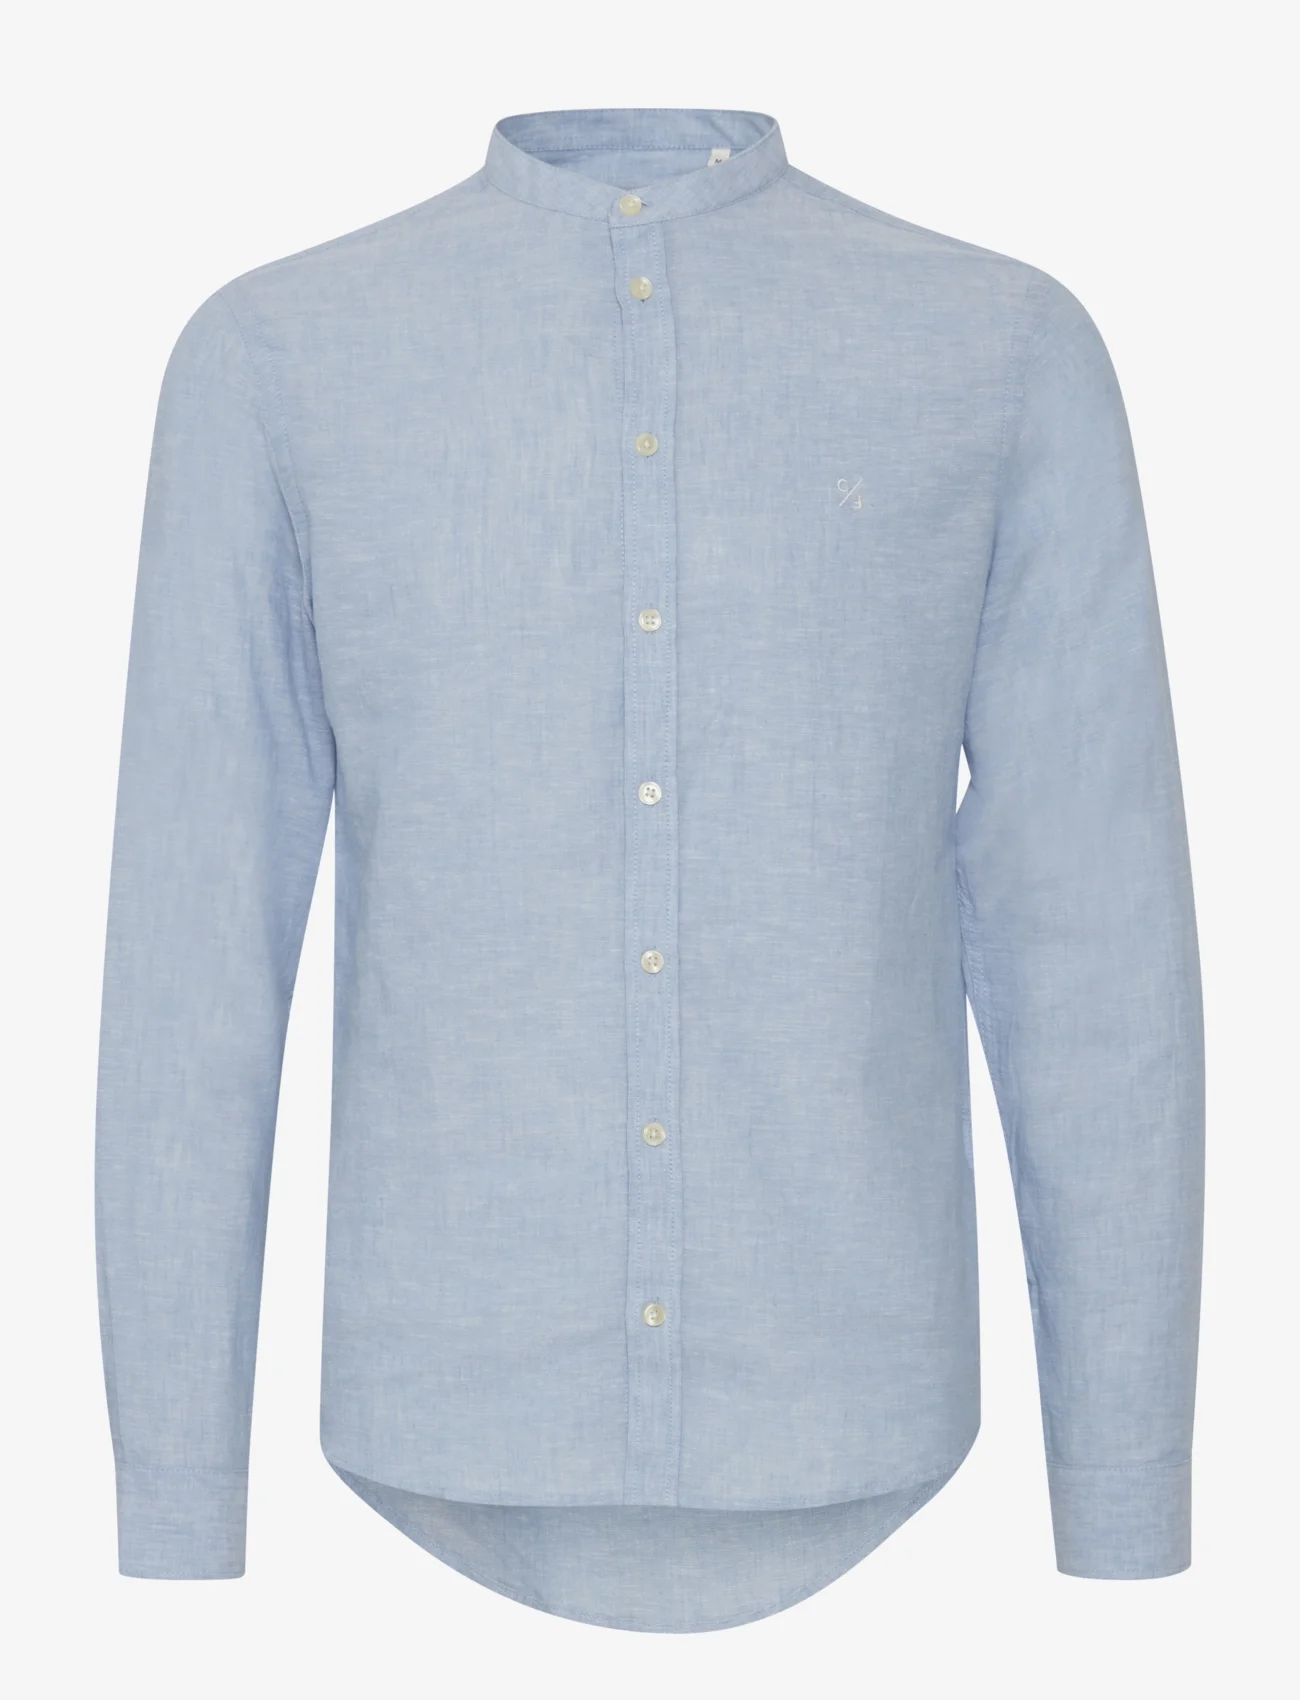 Casual Friday - CFAnton 0053 CC LS linen mix shirt - linen shirts - silver lake blue - 0